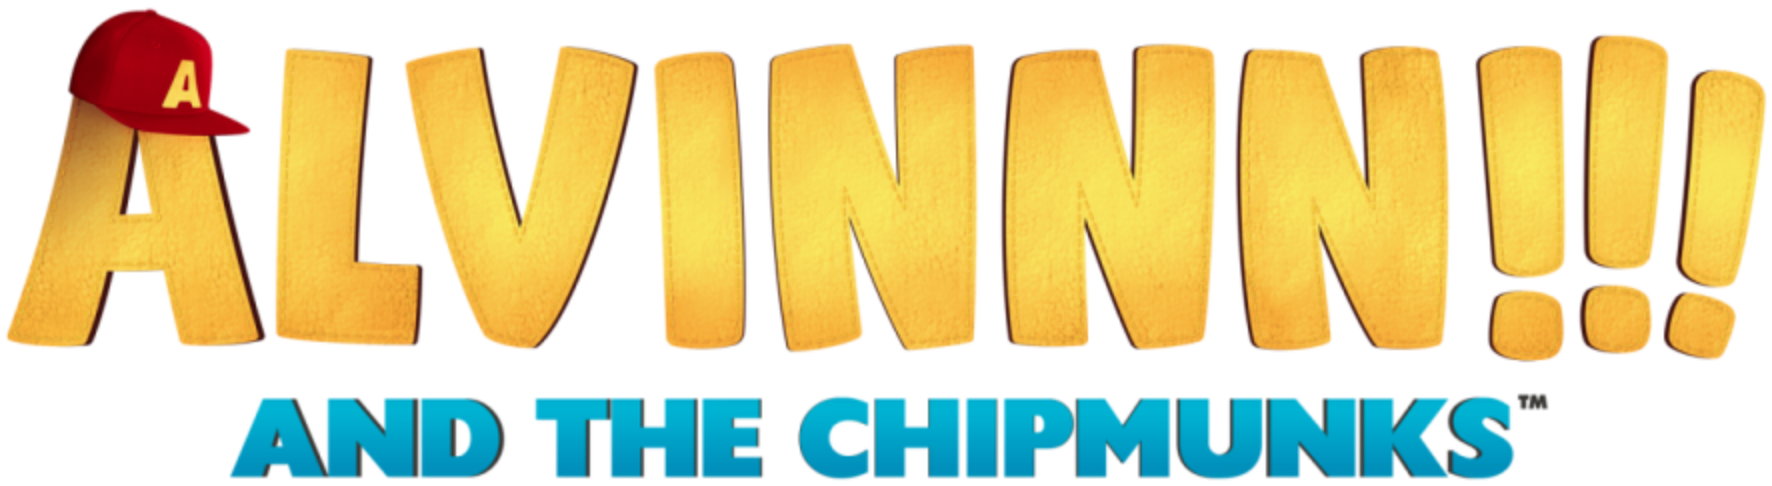 Alvinnn!!! And the Chipmunks (10 DVDs Box Set)